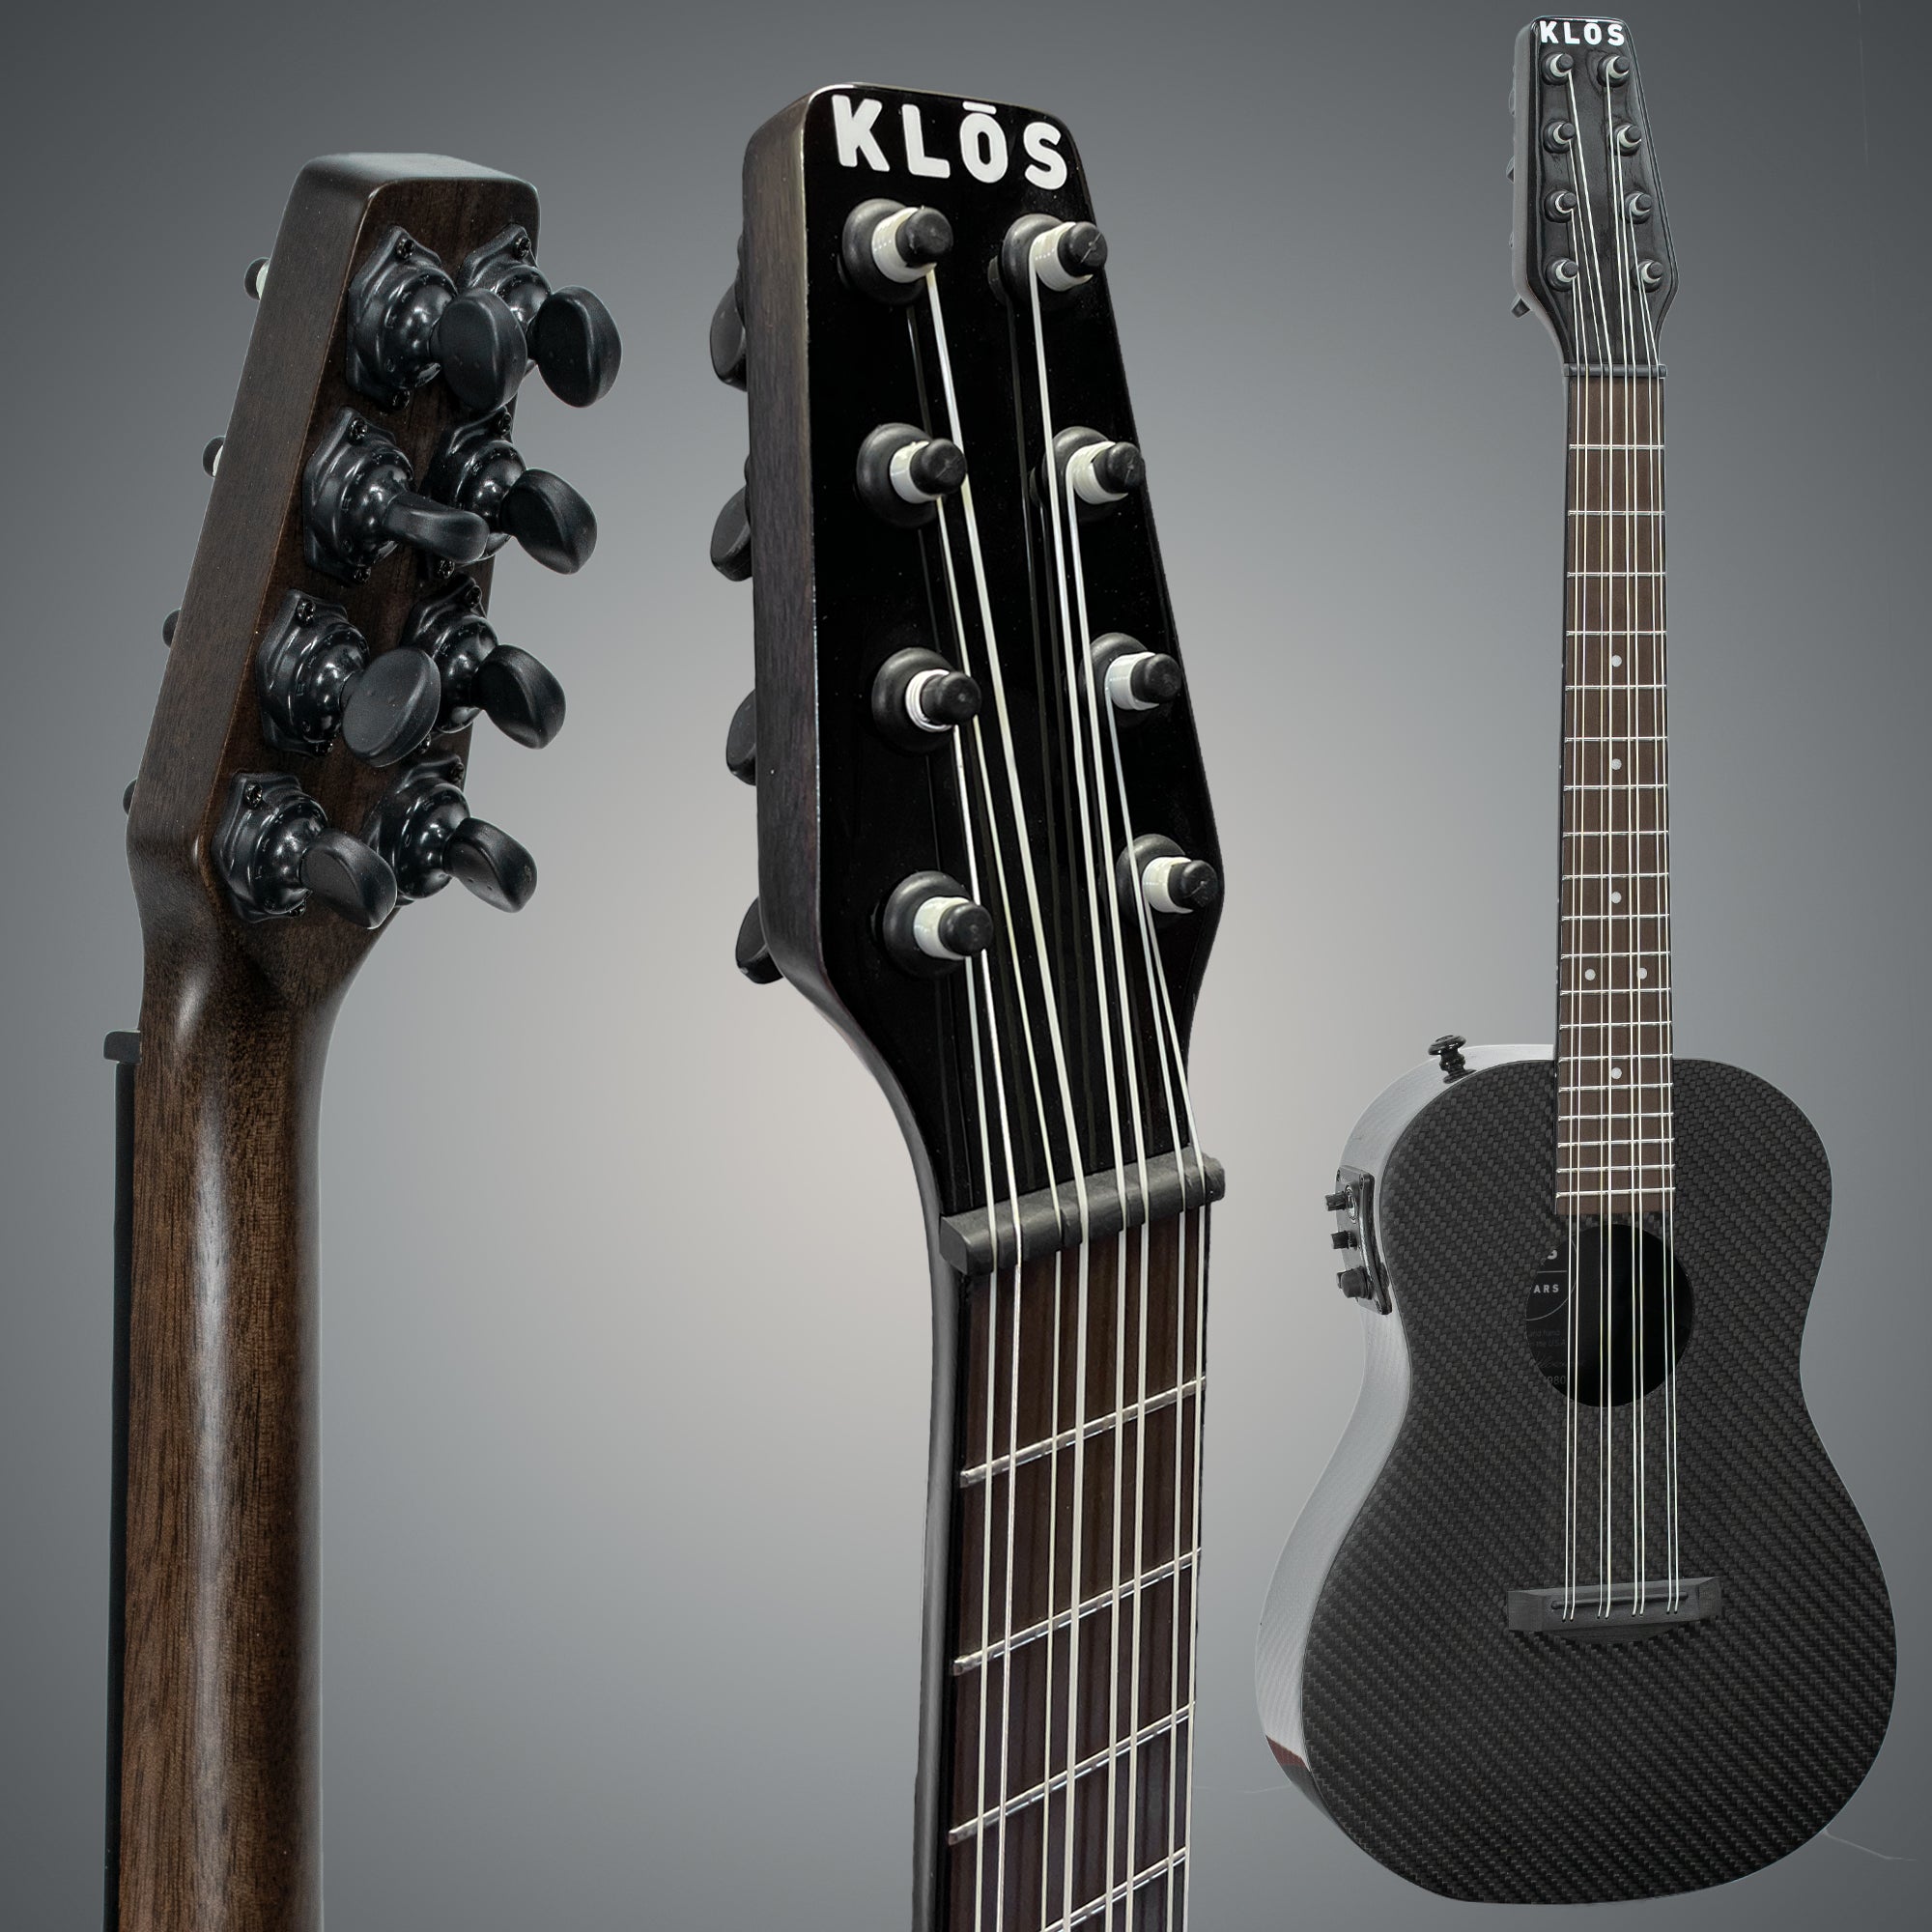 A look at the KLŌS 8-string ukulele next to two close ups of the ukulele's neck